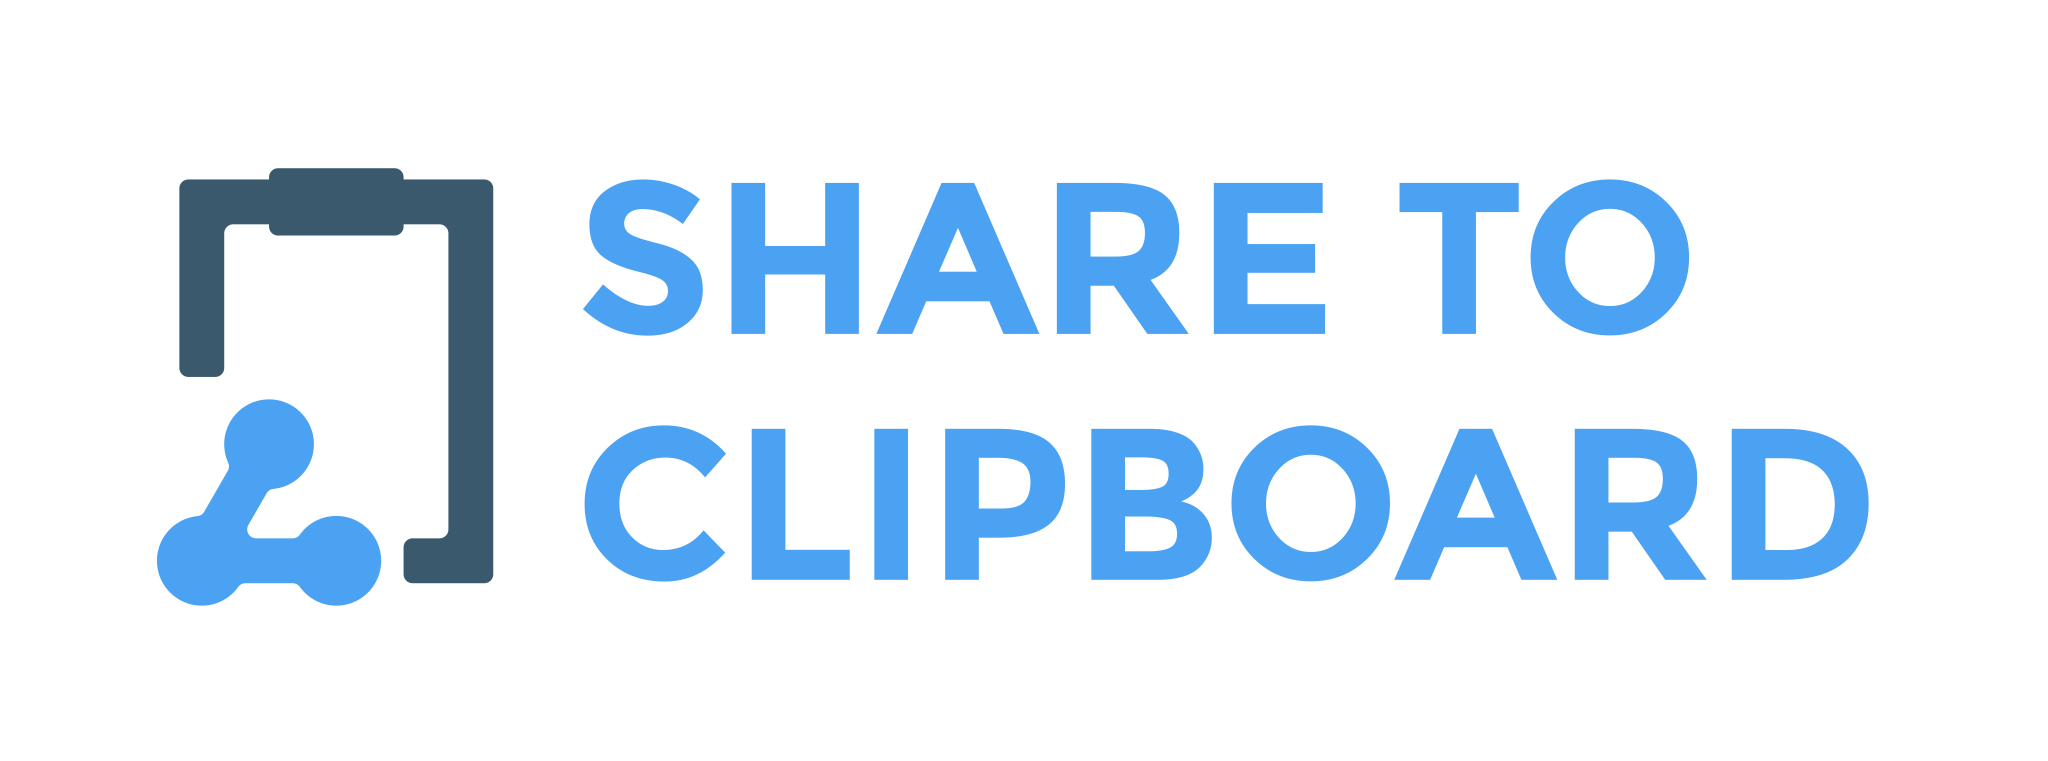 jquery share social clipboard